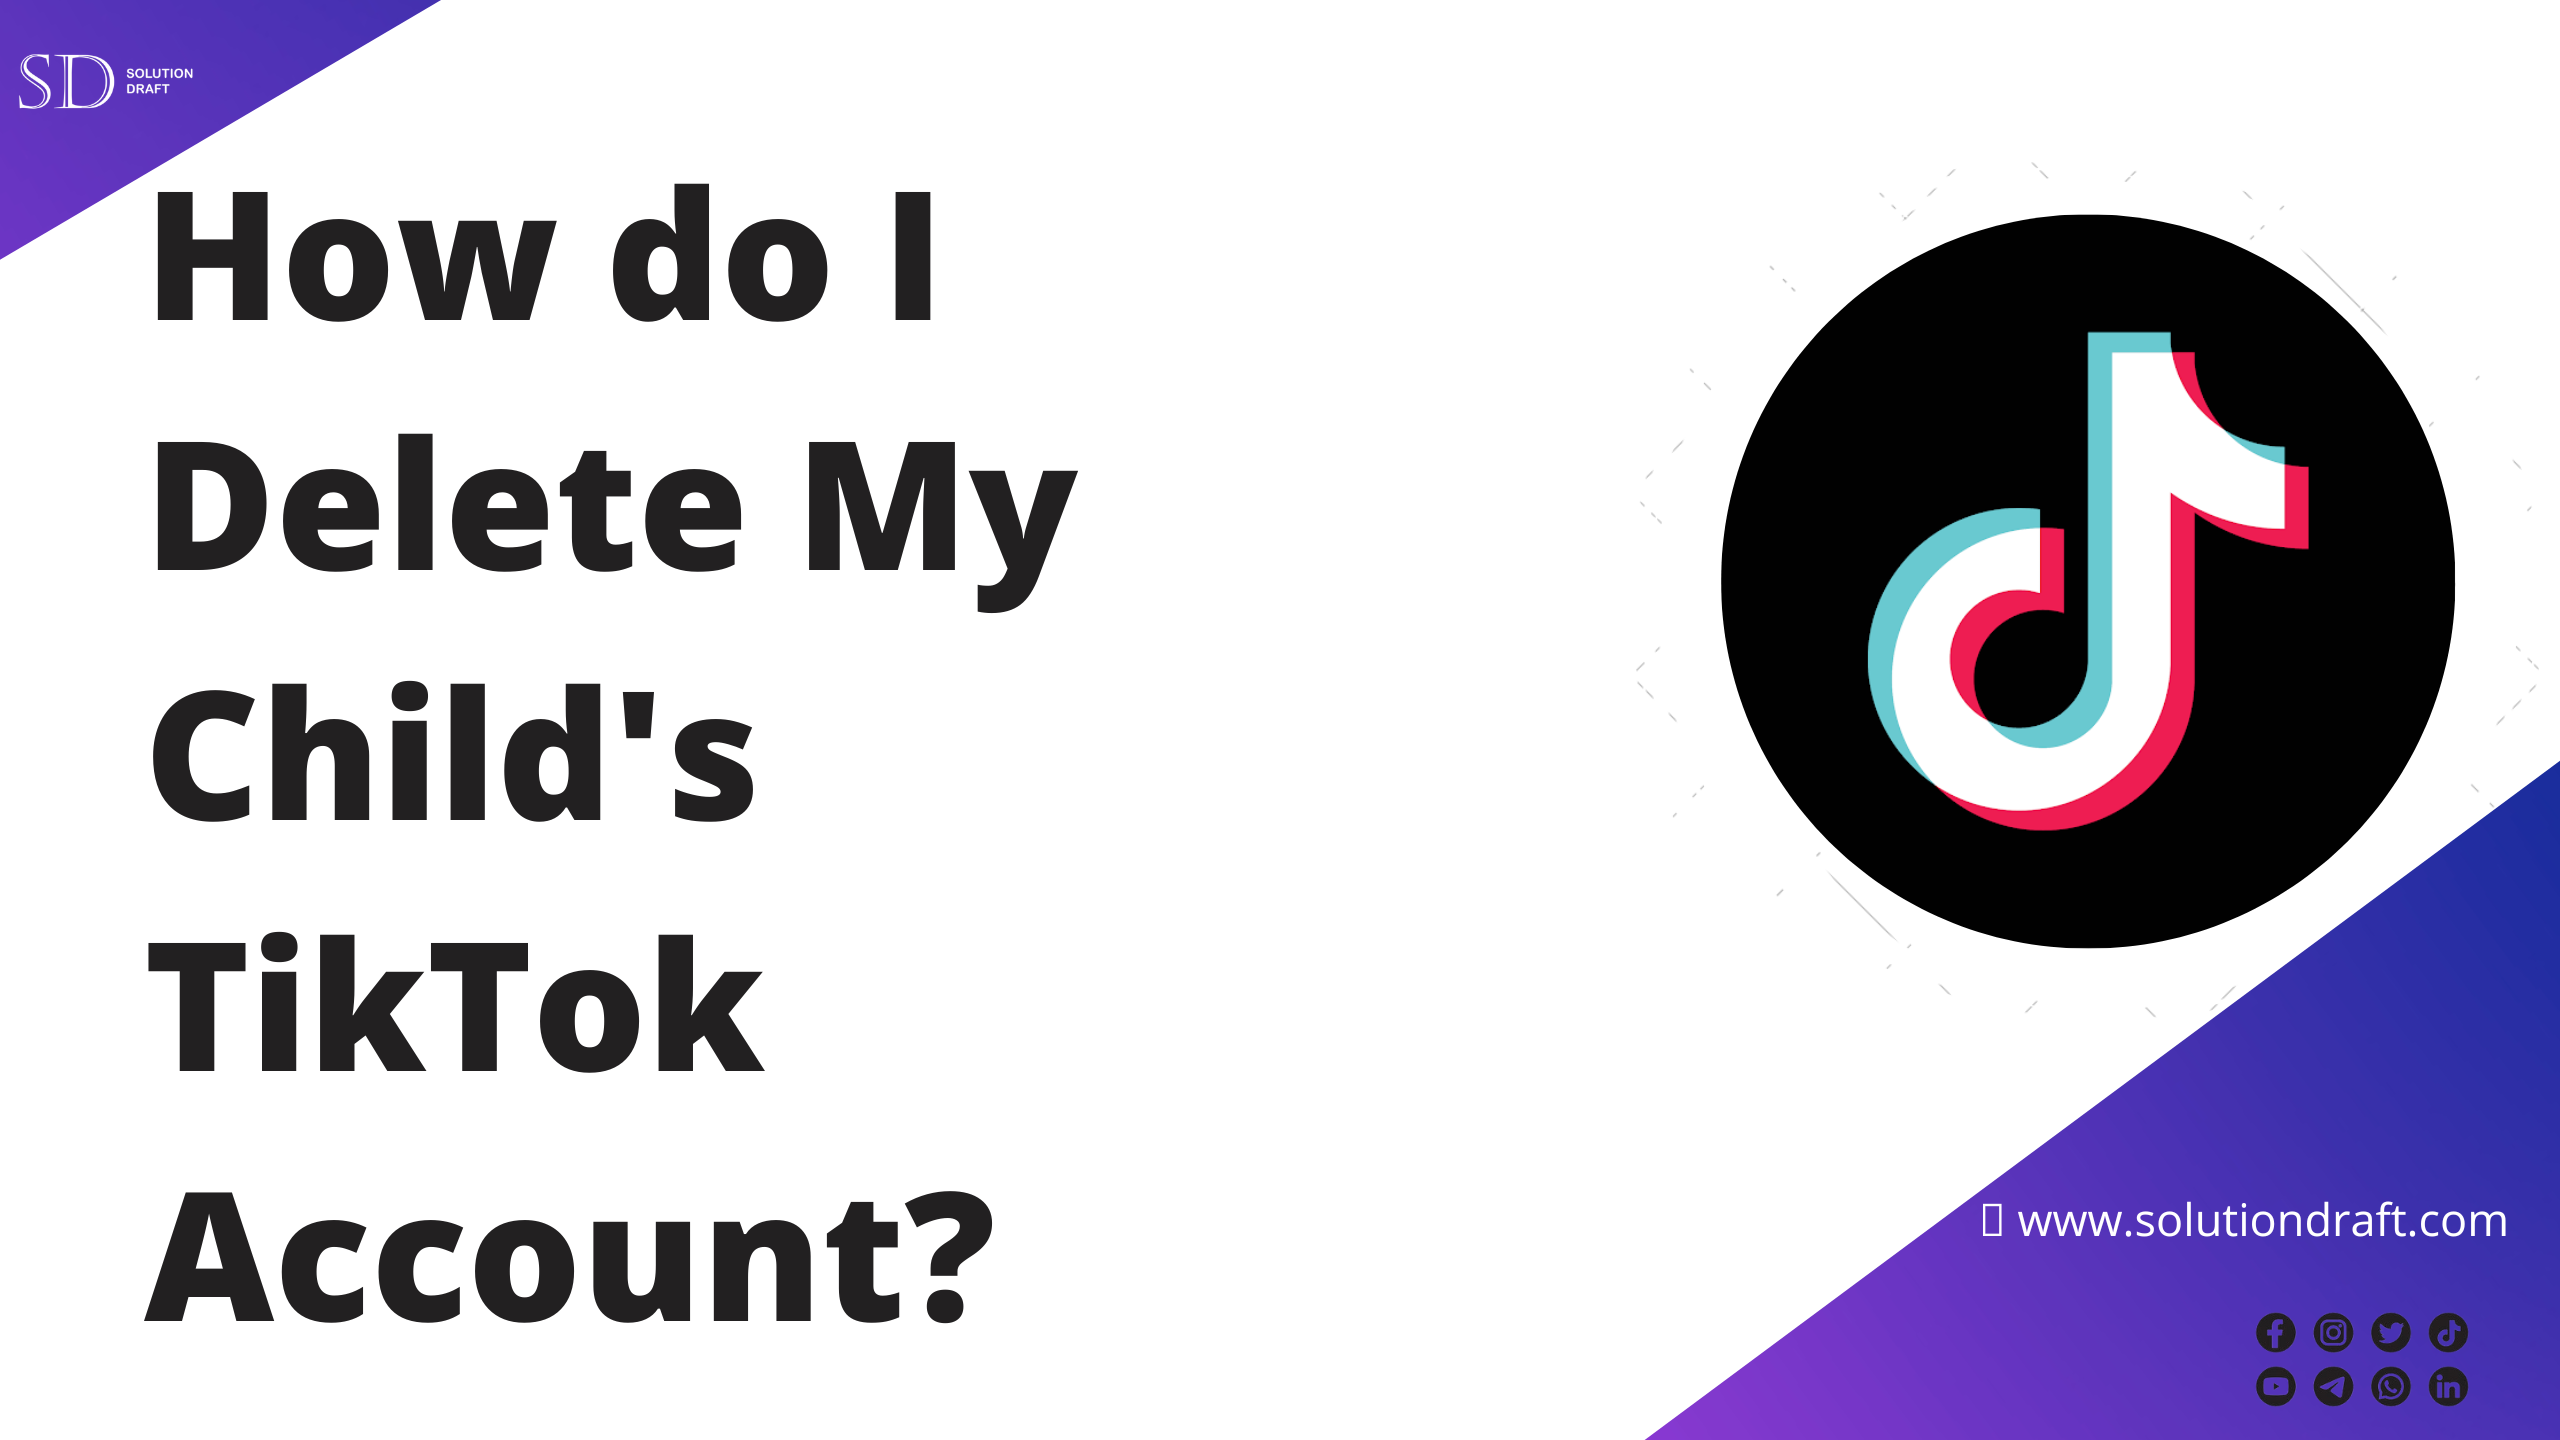 How do I Delete My Child's TikTok Account